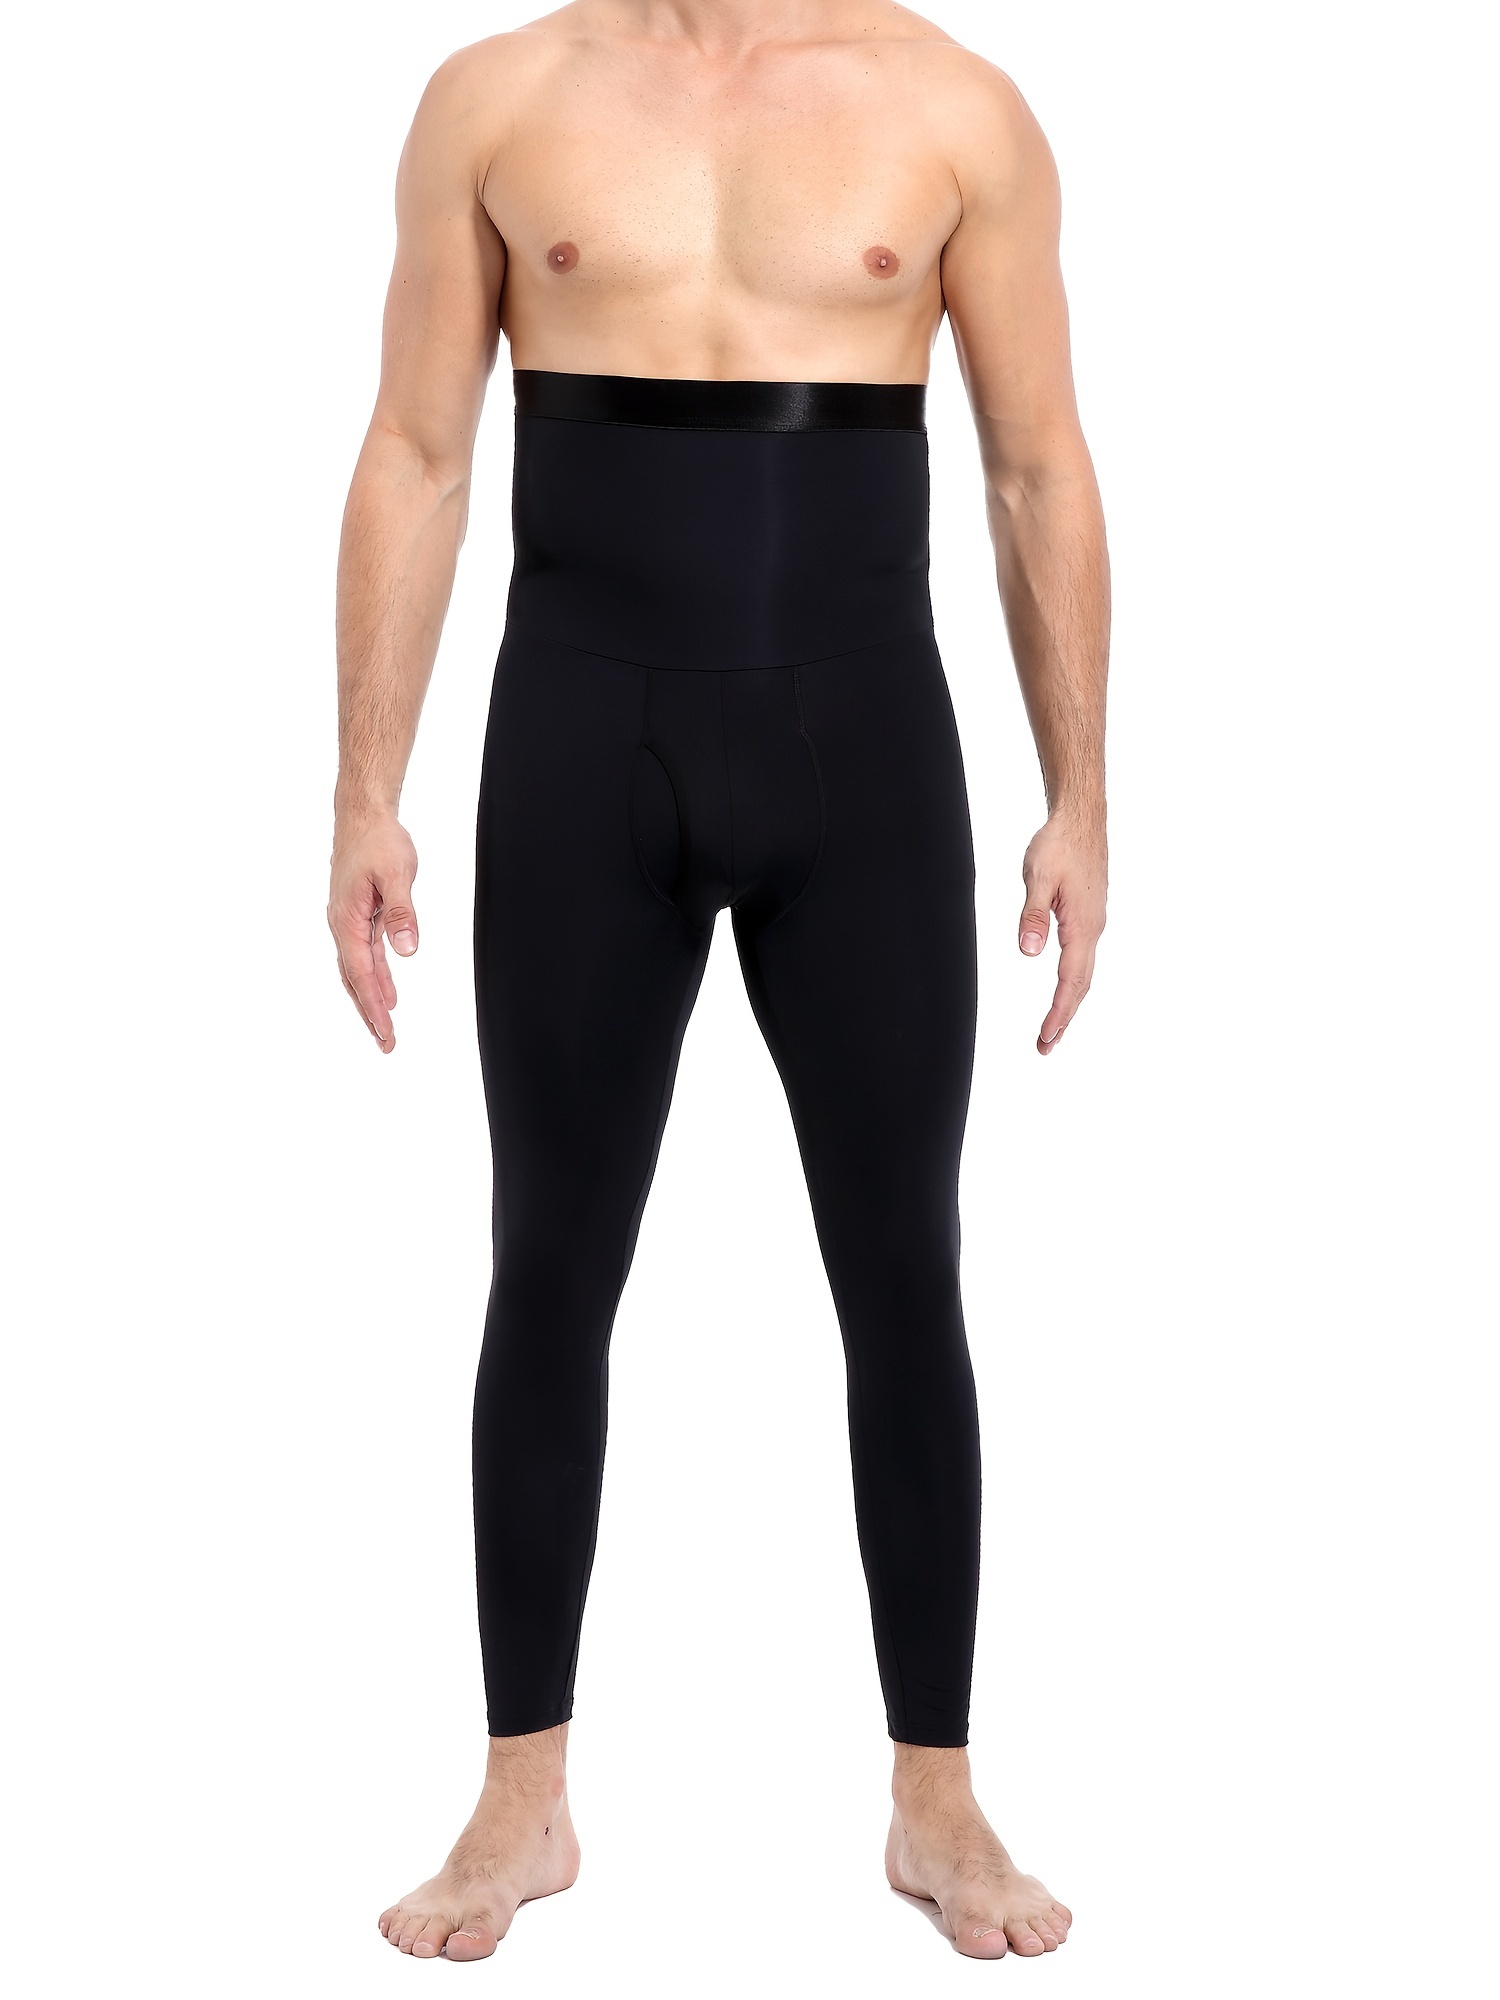 QUAFORT Men's High Waist Body Shaper Compression Leggings for Tummy Control  Baselayers Sports Pants Slimming Tights Underwear, Black, XXL price in UAE,  UAE